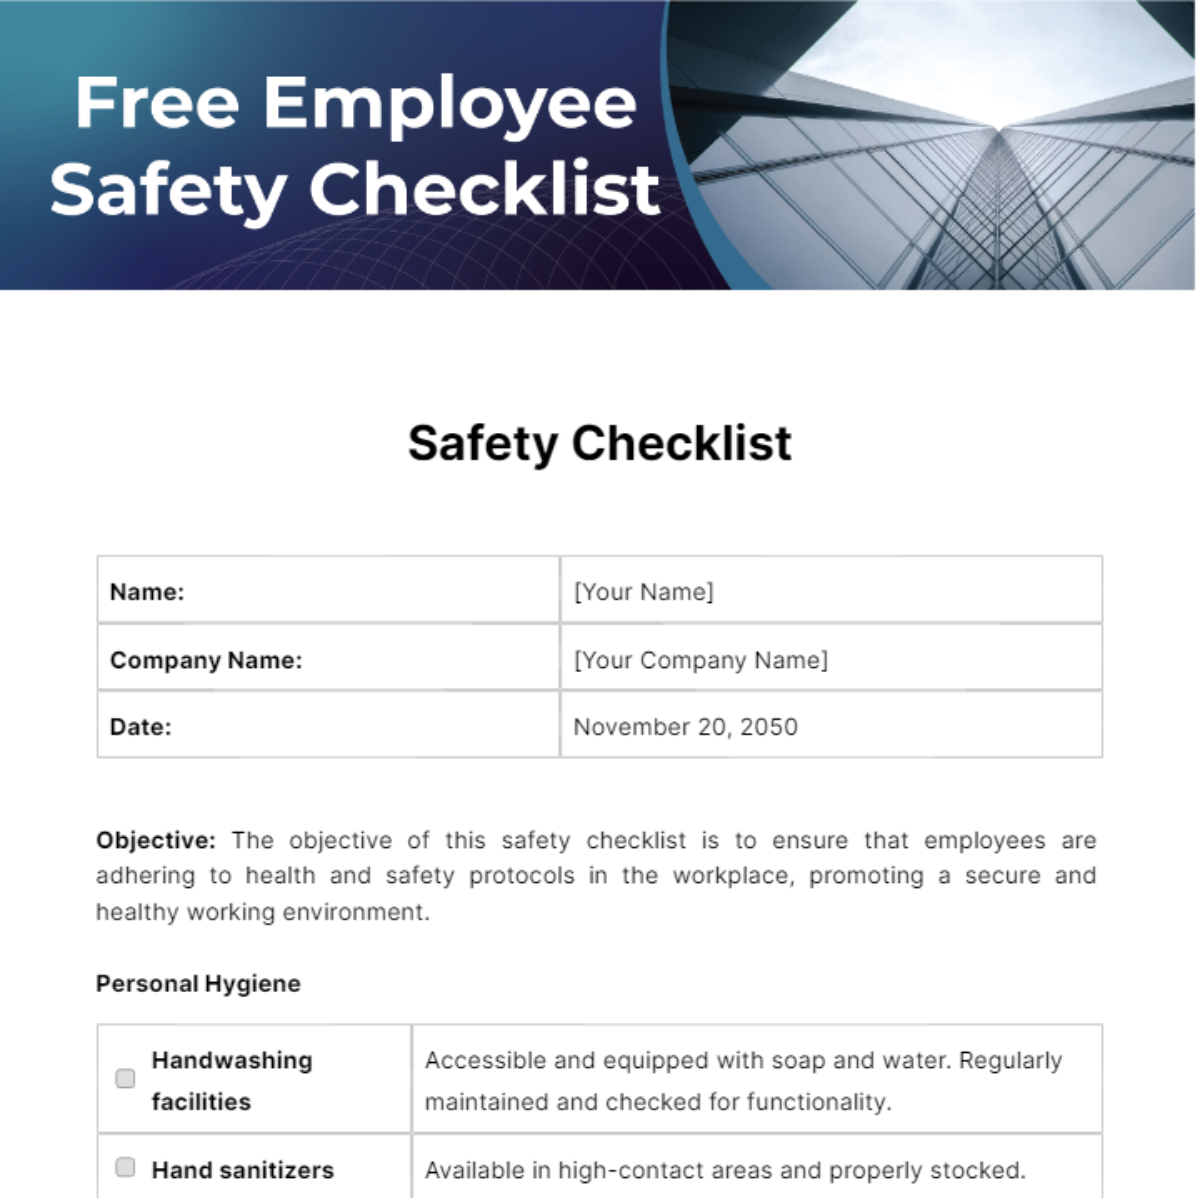 Free Employee Safety Checklist Template